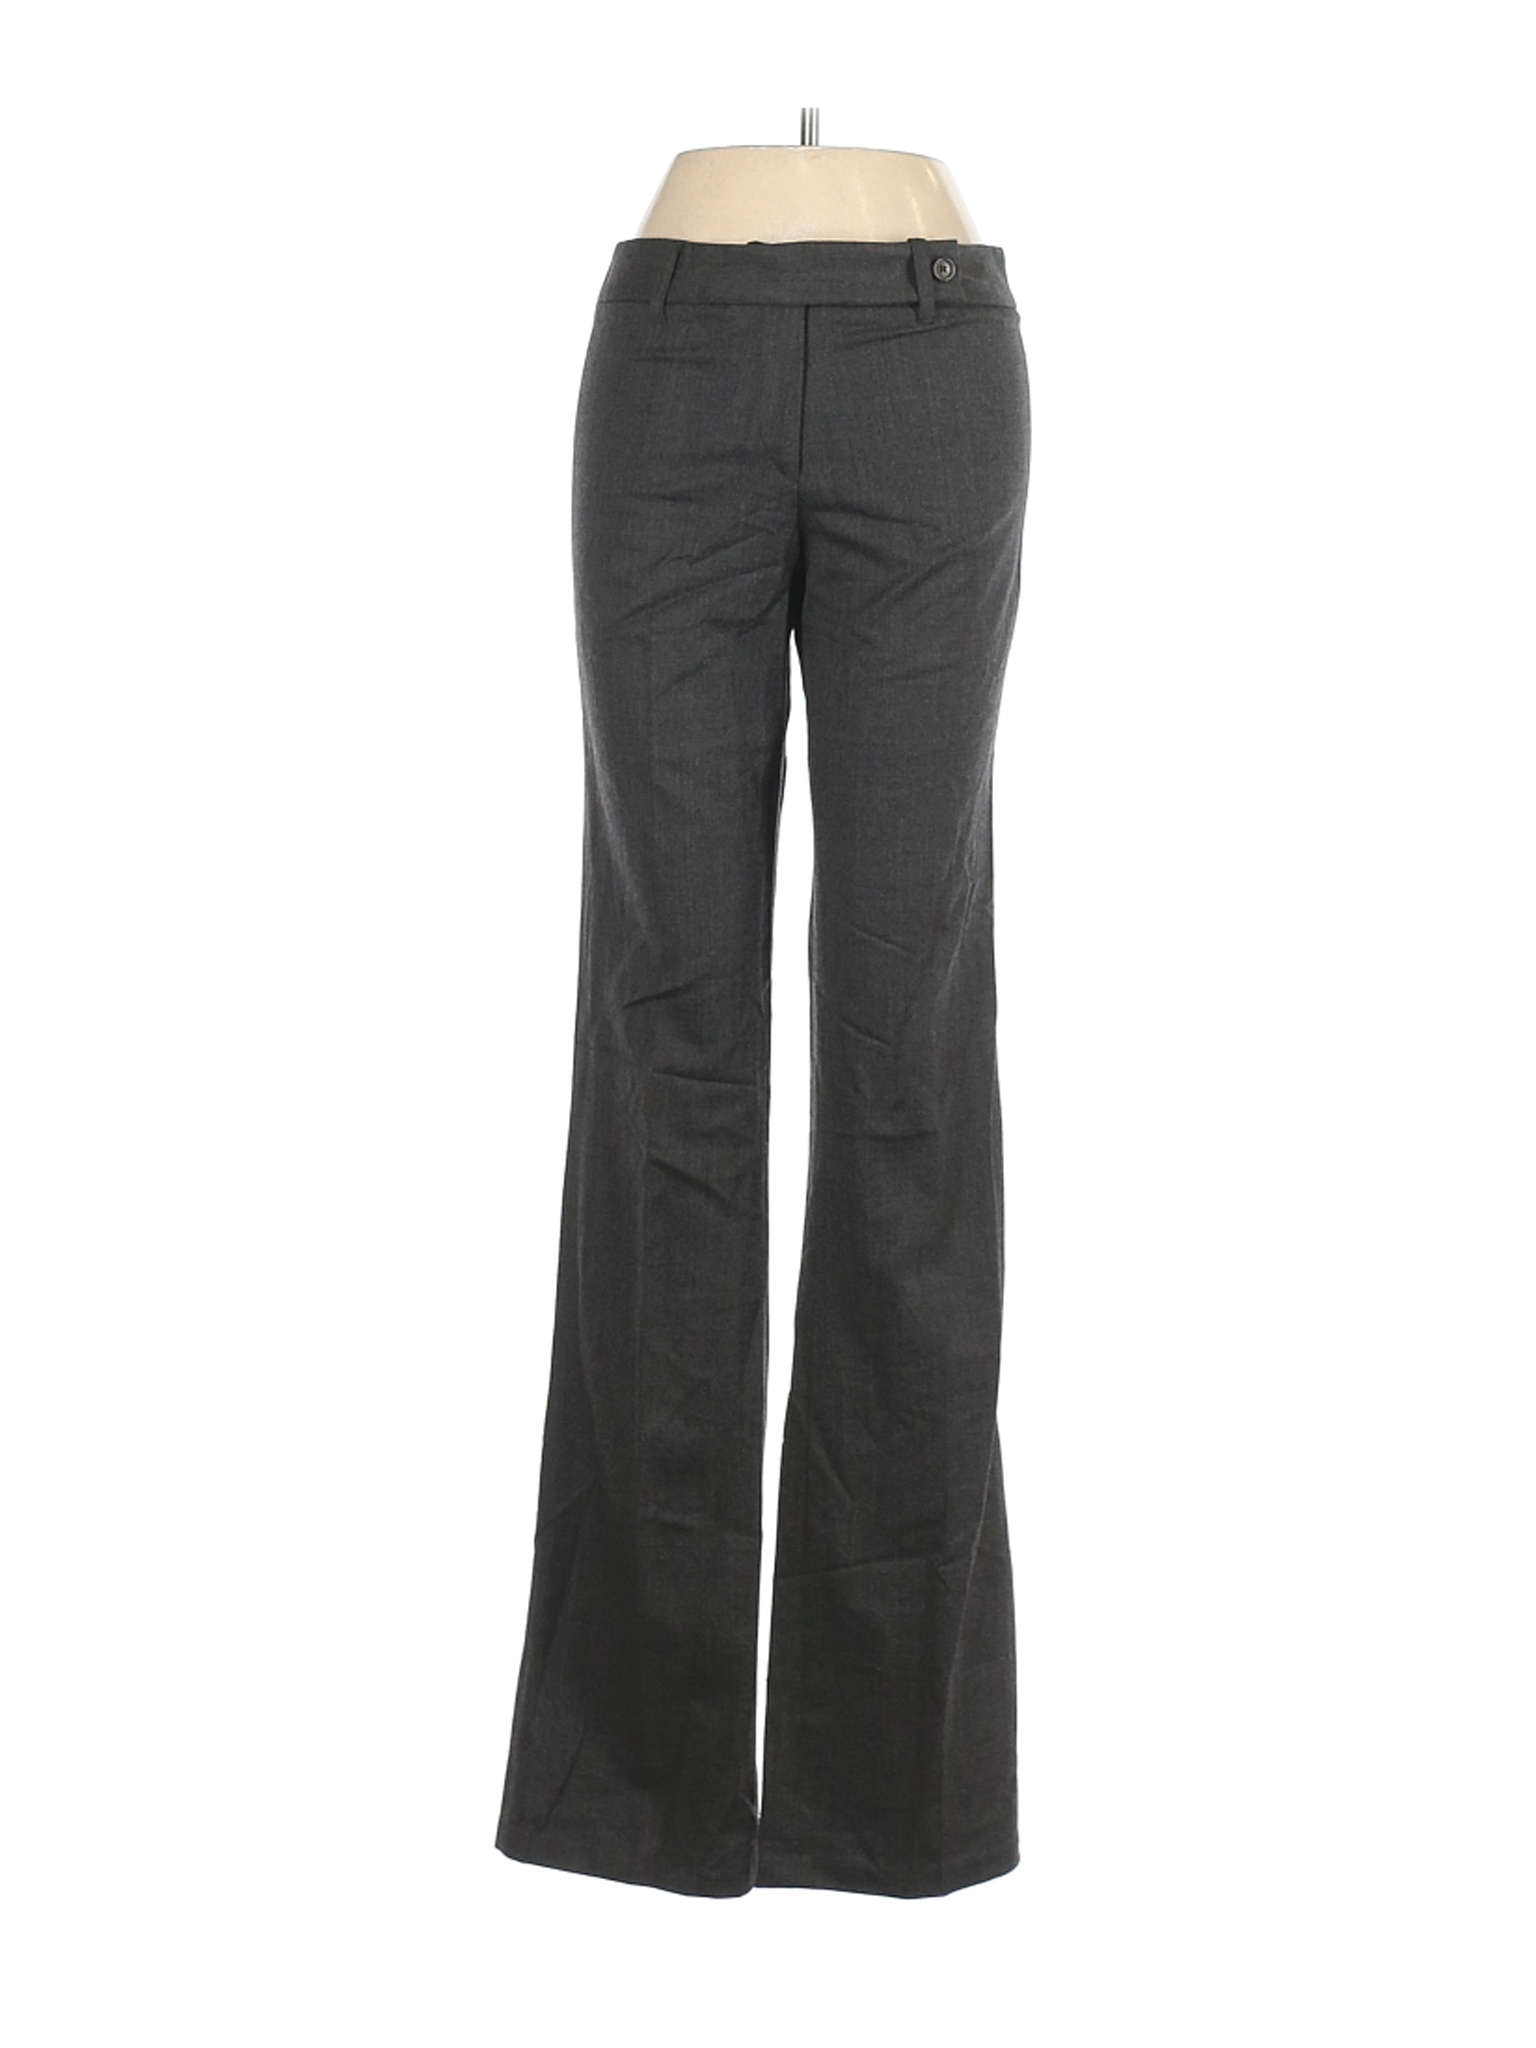 MICHAEL Michael Kors Women Black Dress Pants 0 | eBay